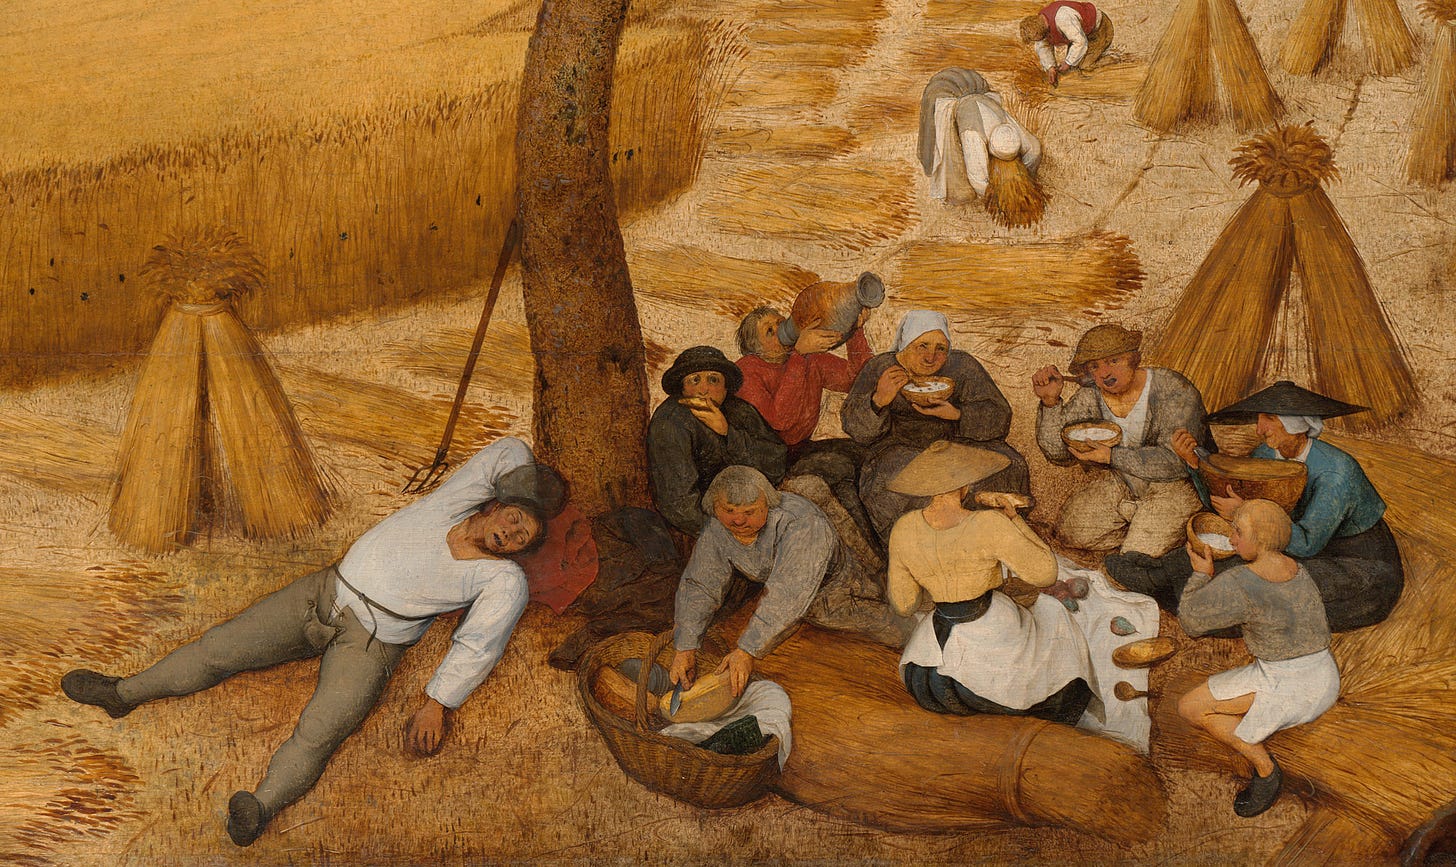 On Bruegel's The Harvesters | Painters' Table